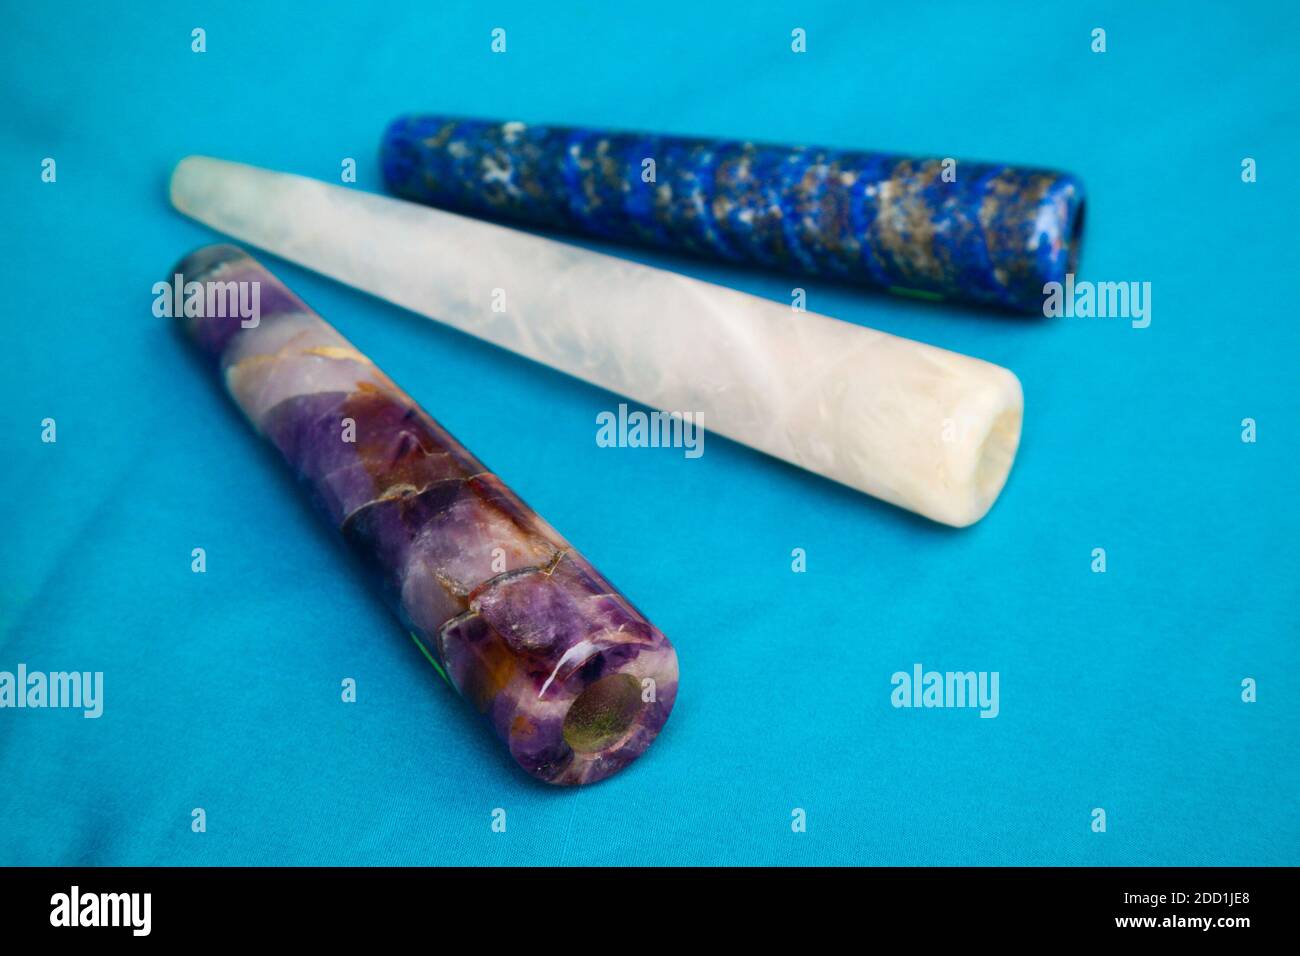 Clay chillum for marijuana smoking on a blue fabric background Stock Photo